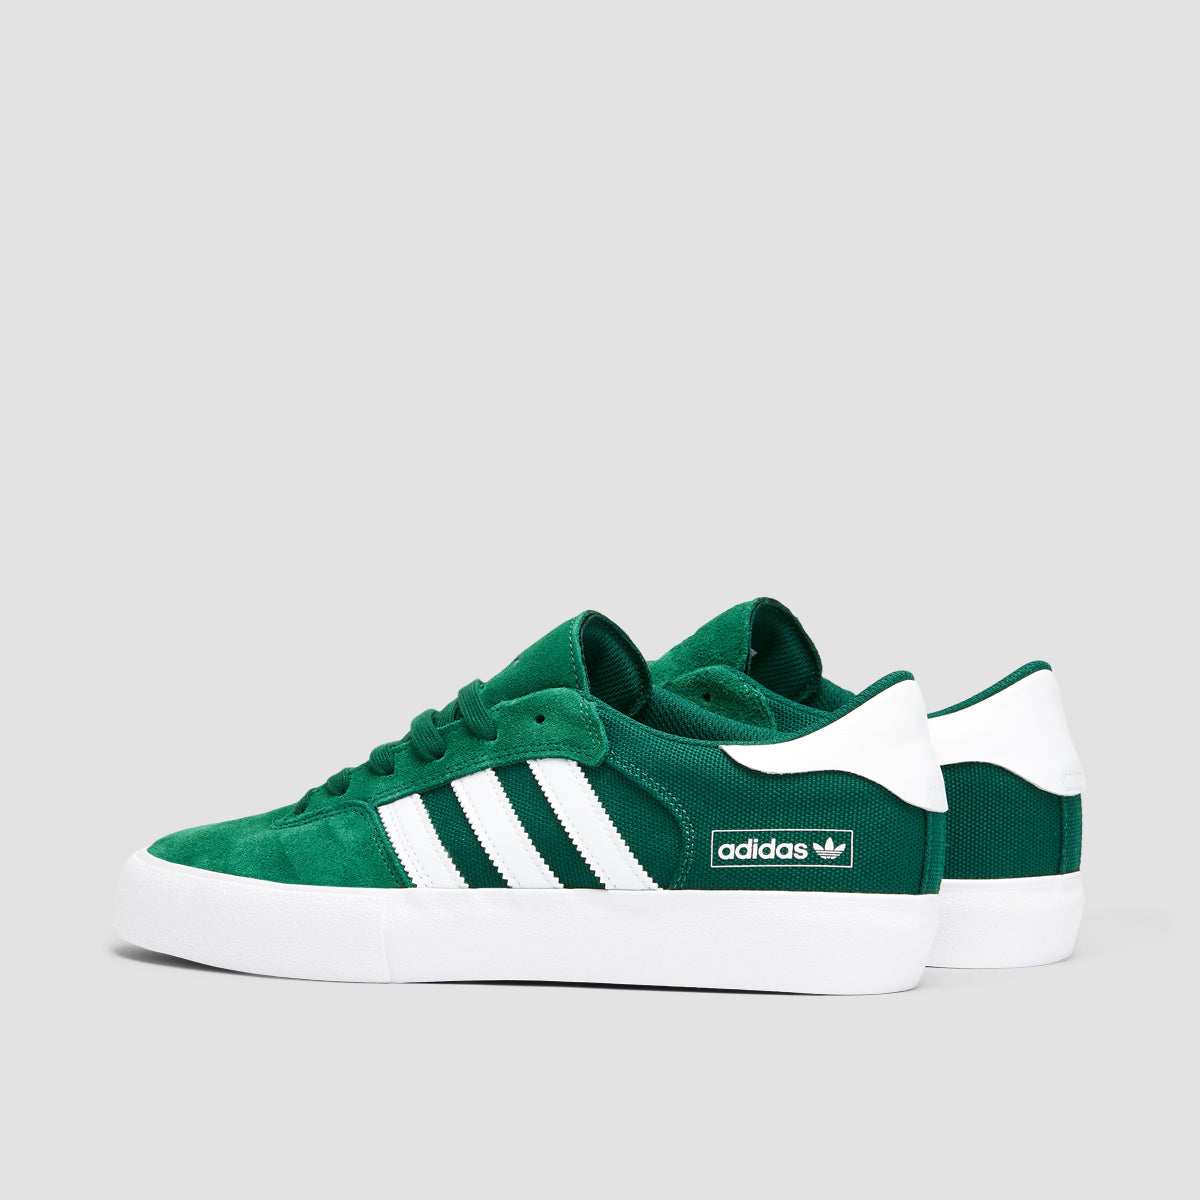 adidas Matchbreak Super Shoes - Dark Green/Ftwr White/Ftwr White